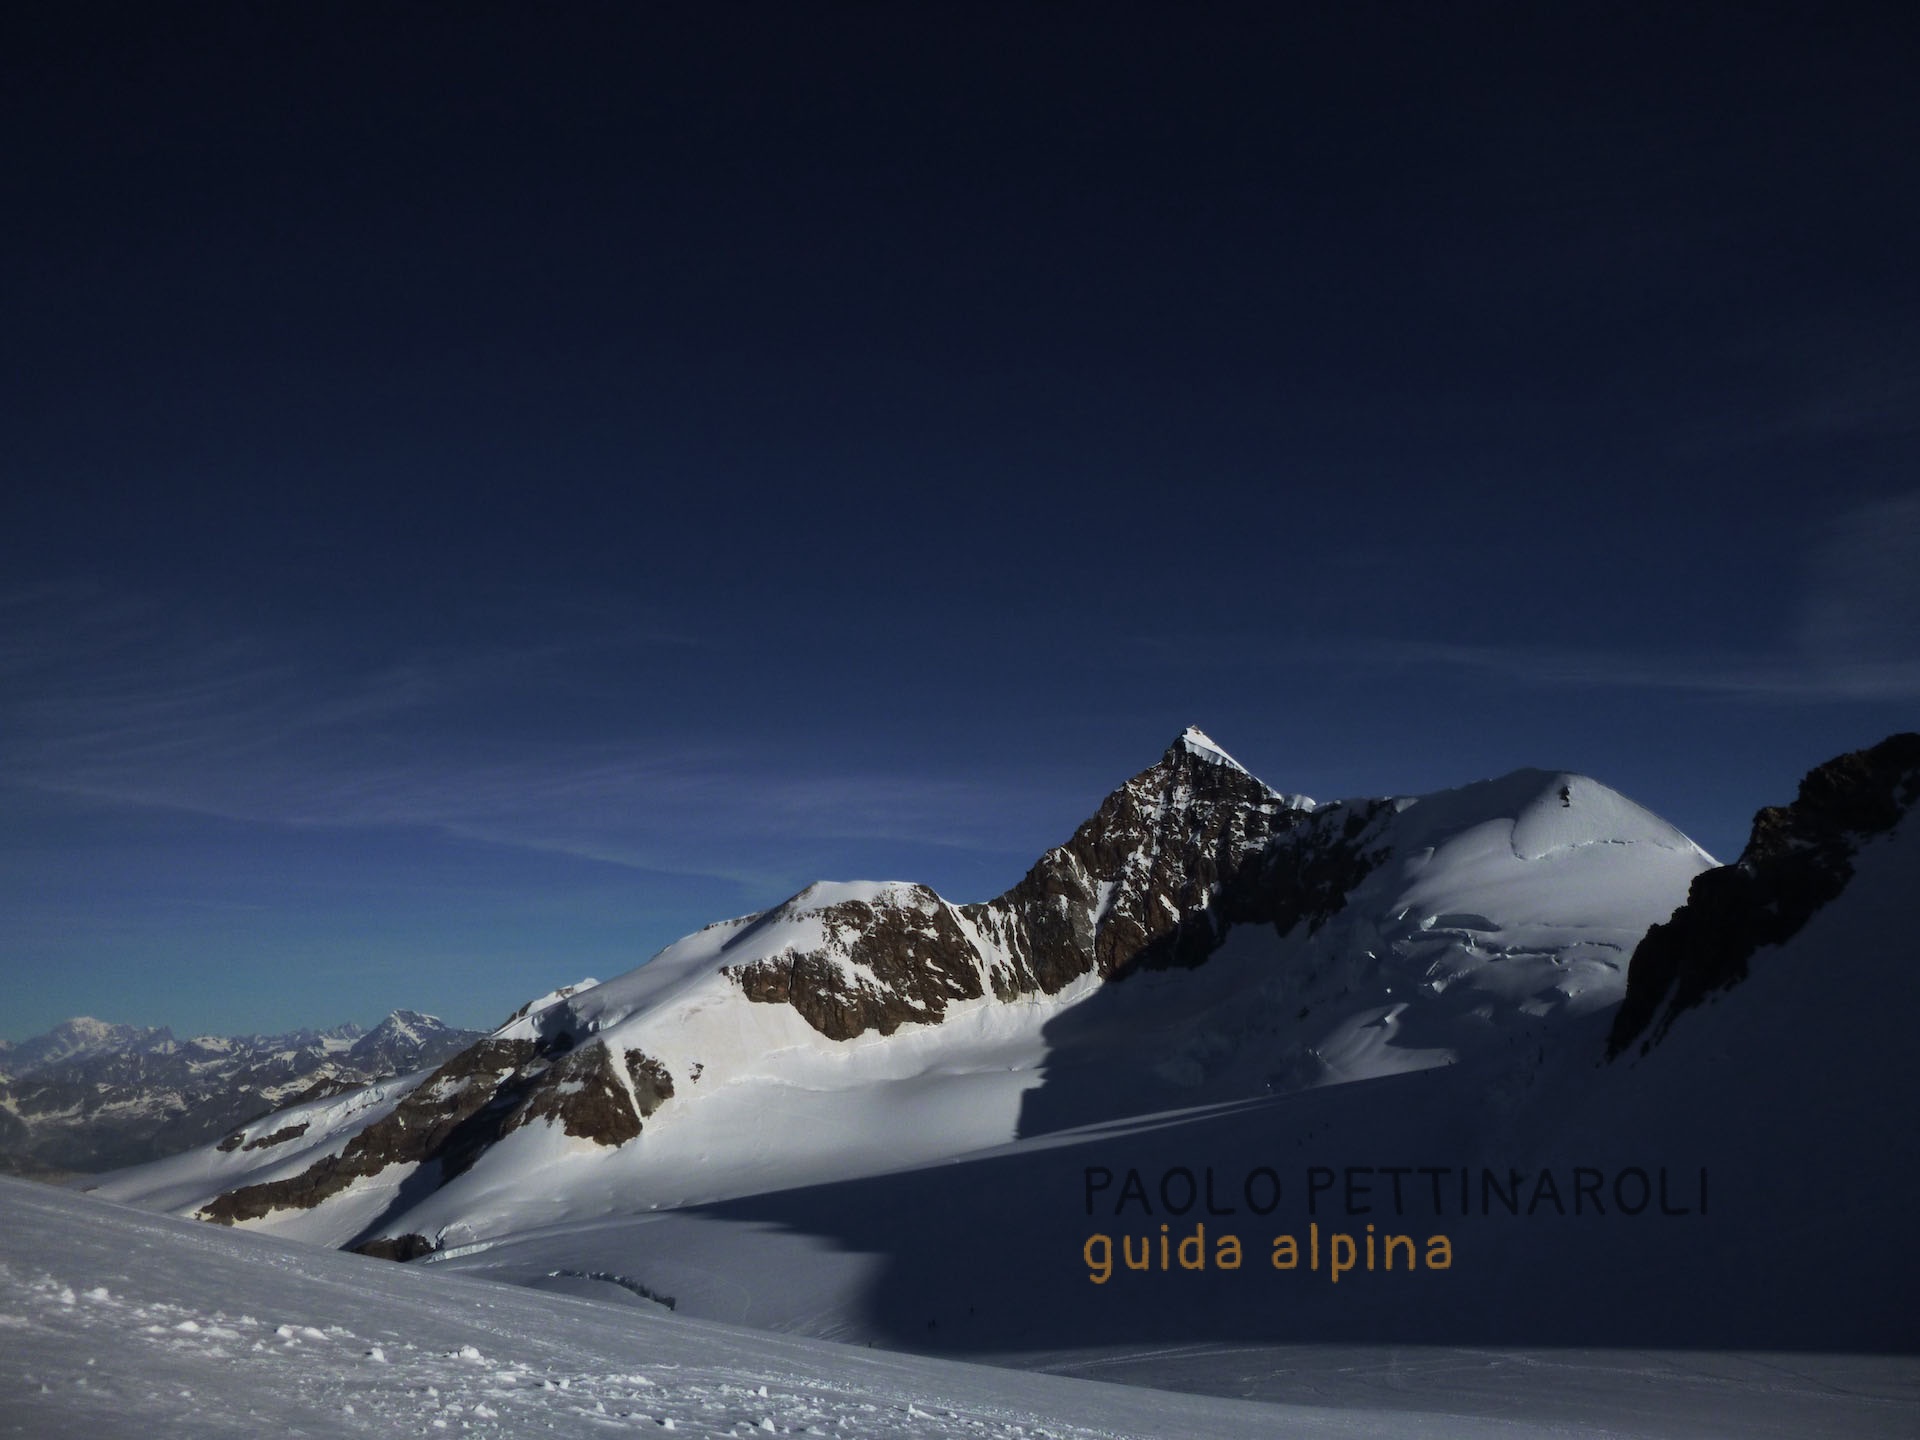 P1030707-panorami_paolo pettinaroli guida alpina